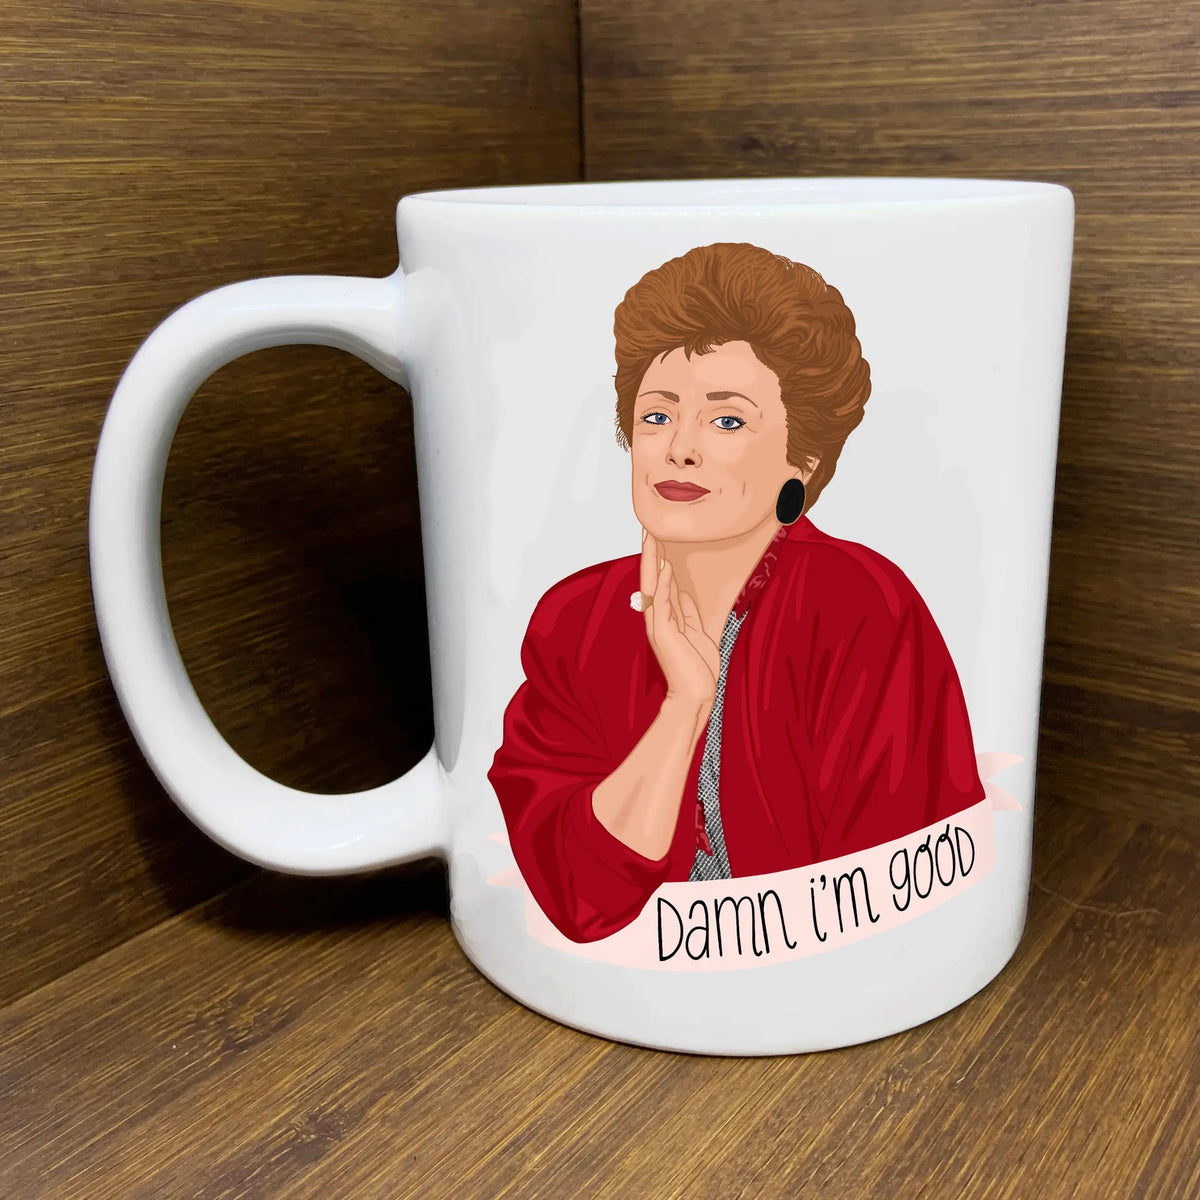 Blanche Coffee Mug